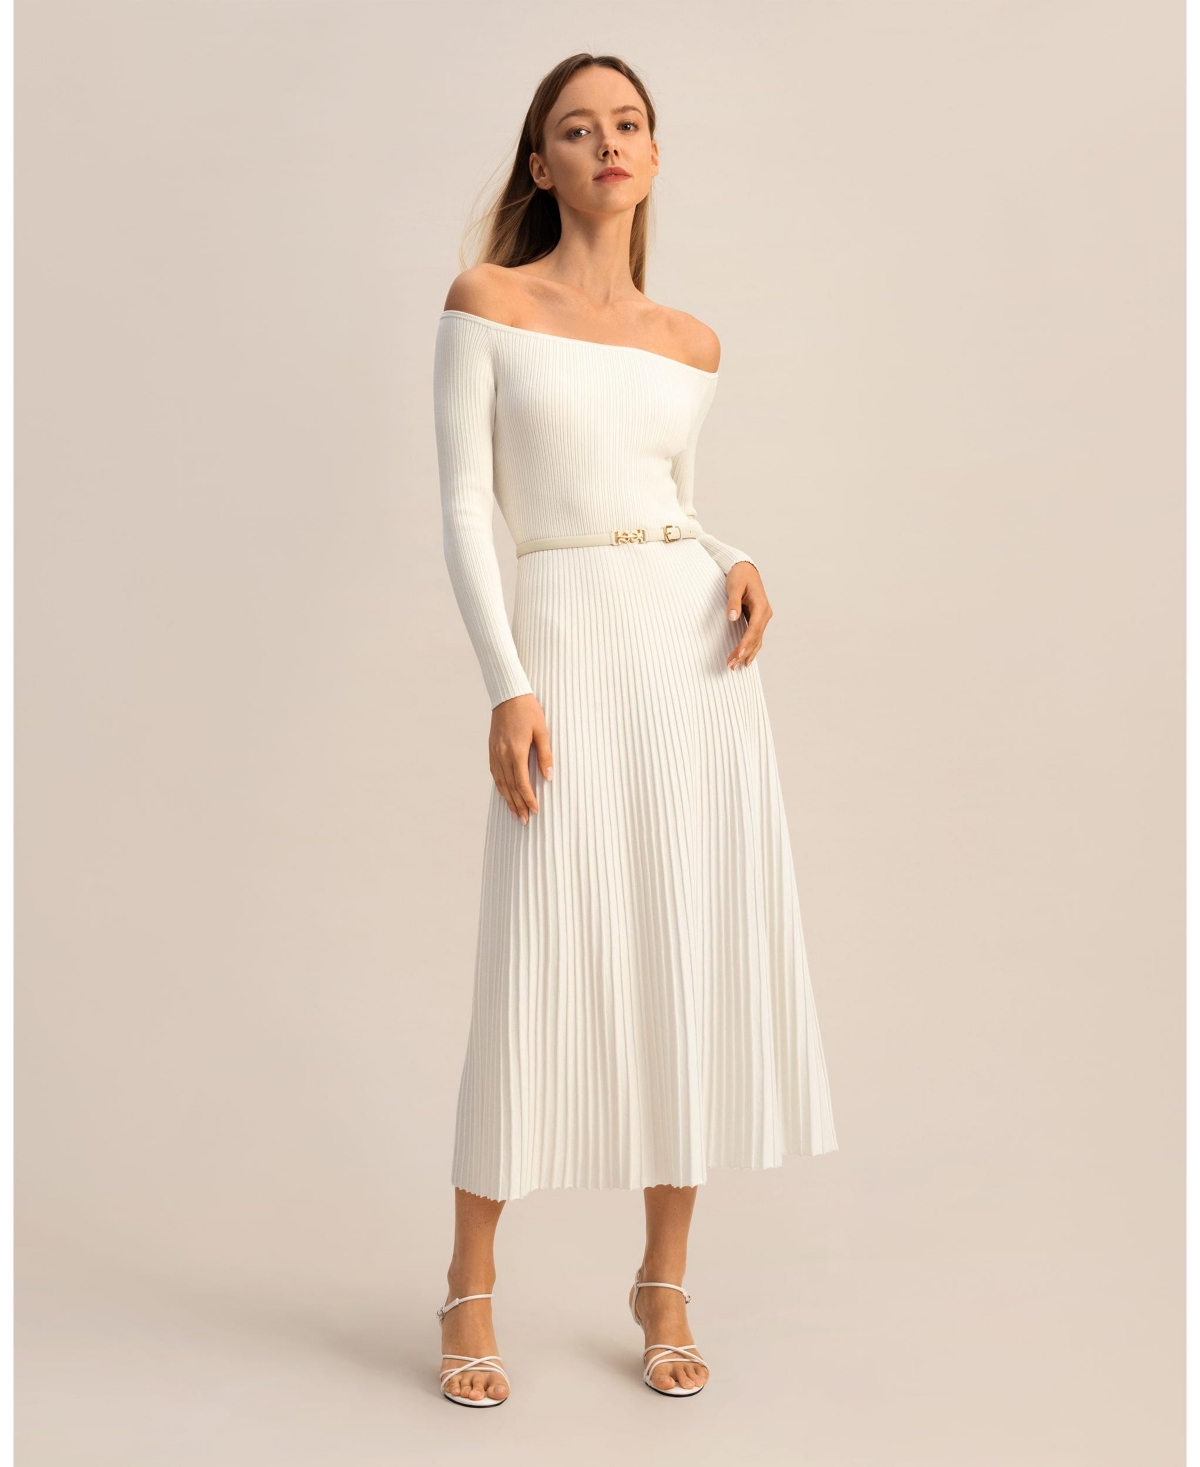 Women's The Vivi Knit Dress for Women - Natural white